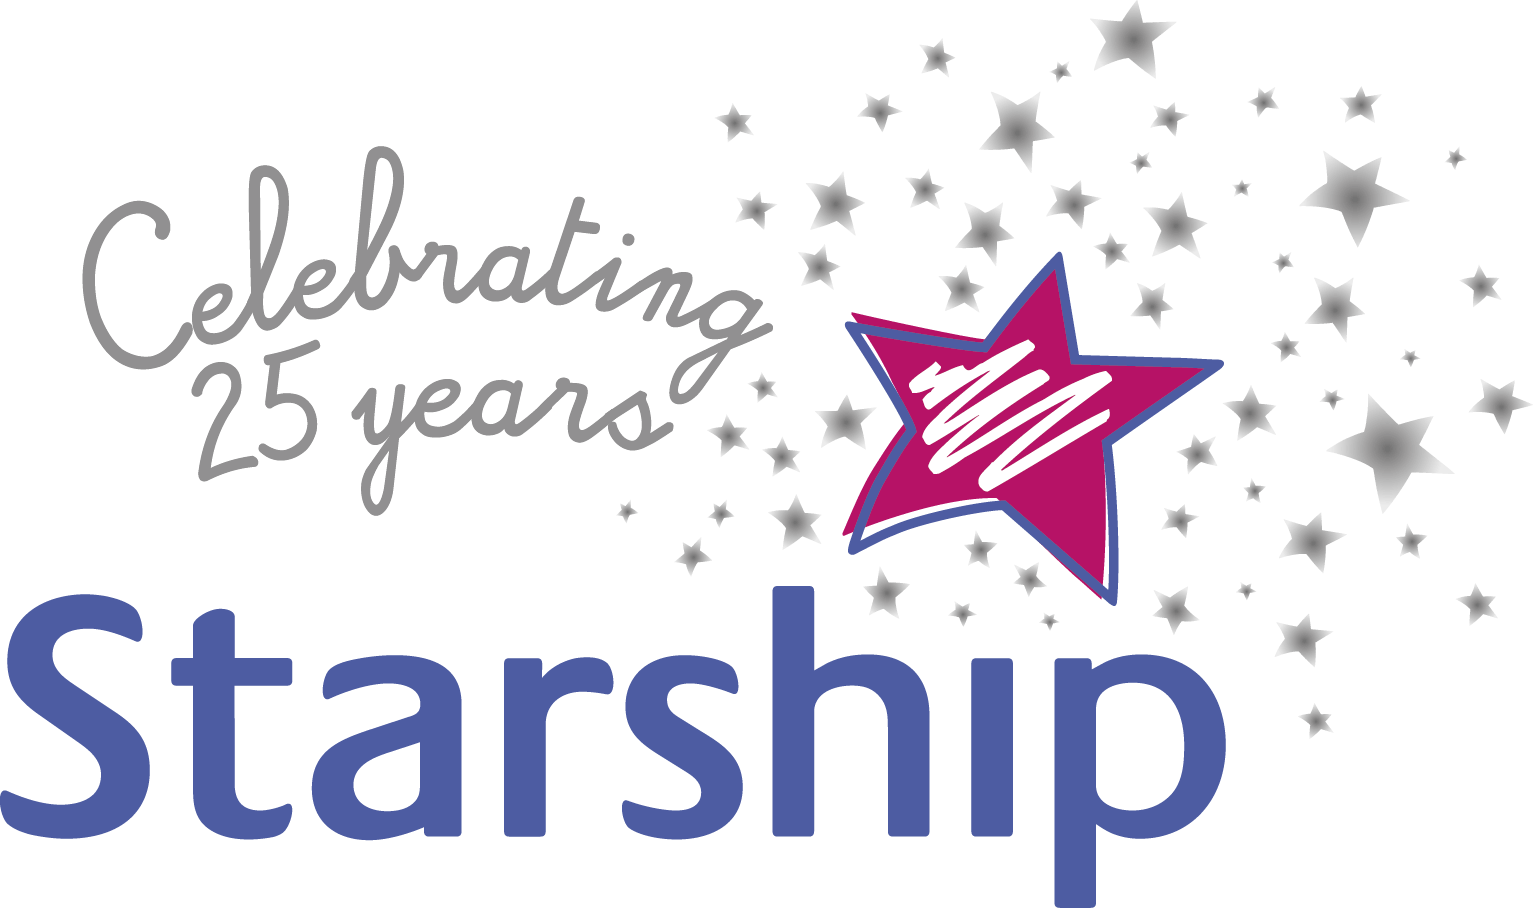 Starship Logo - The Starship logo includes lots of Stars. The name Starship was